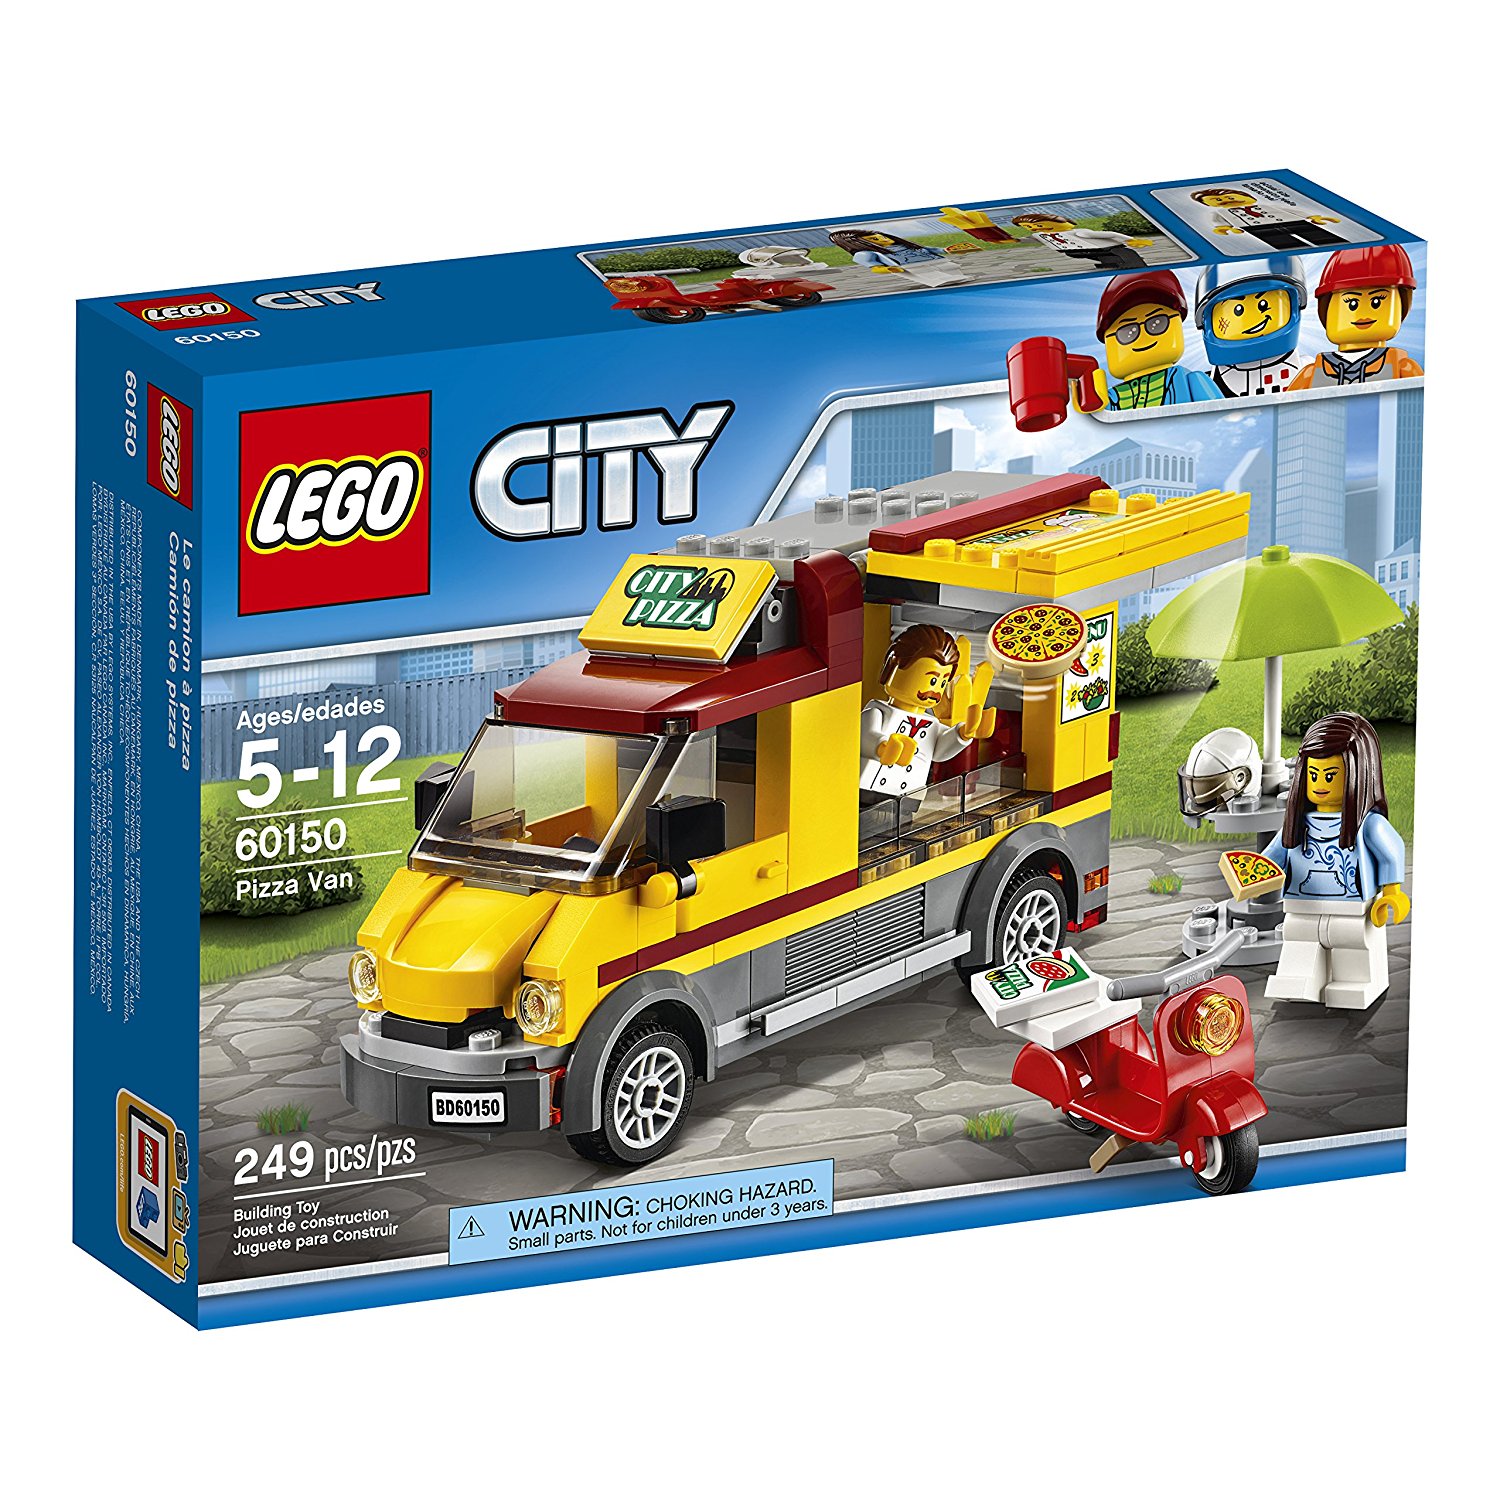 LEGO City Pizza Van Building Kit for $12.99 - Lowest Price! - AddictedToSaving.com